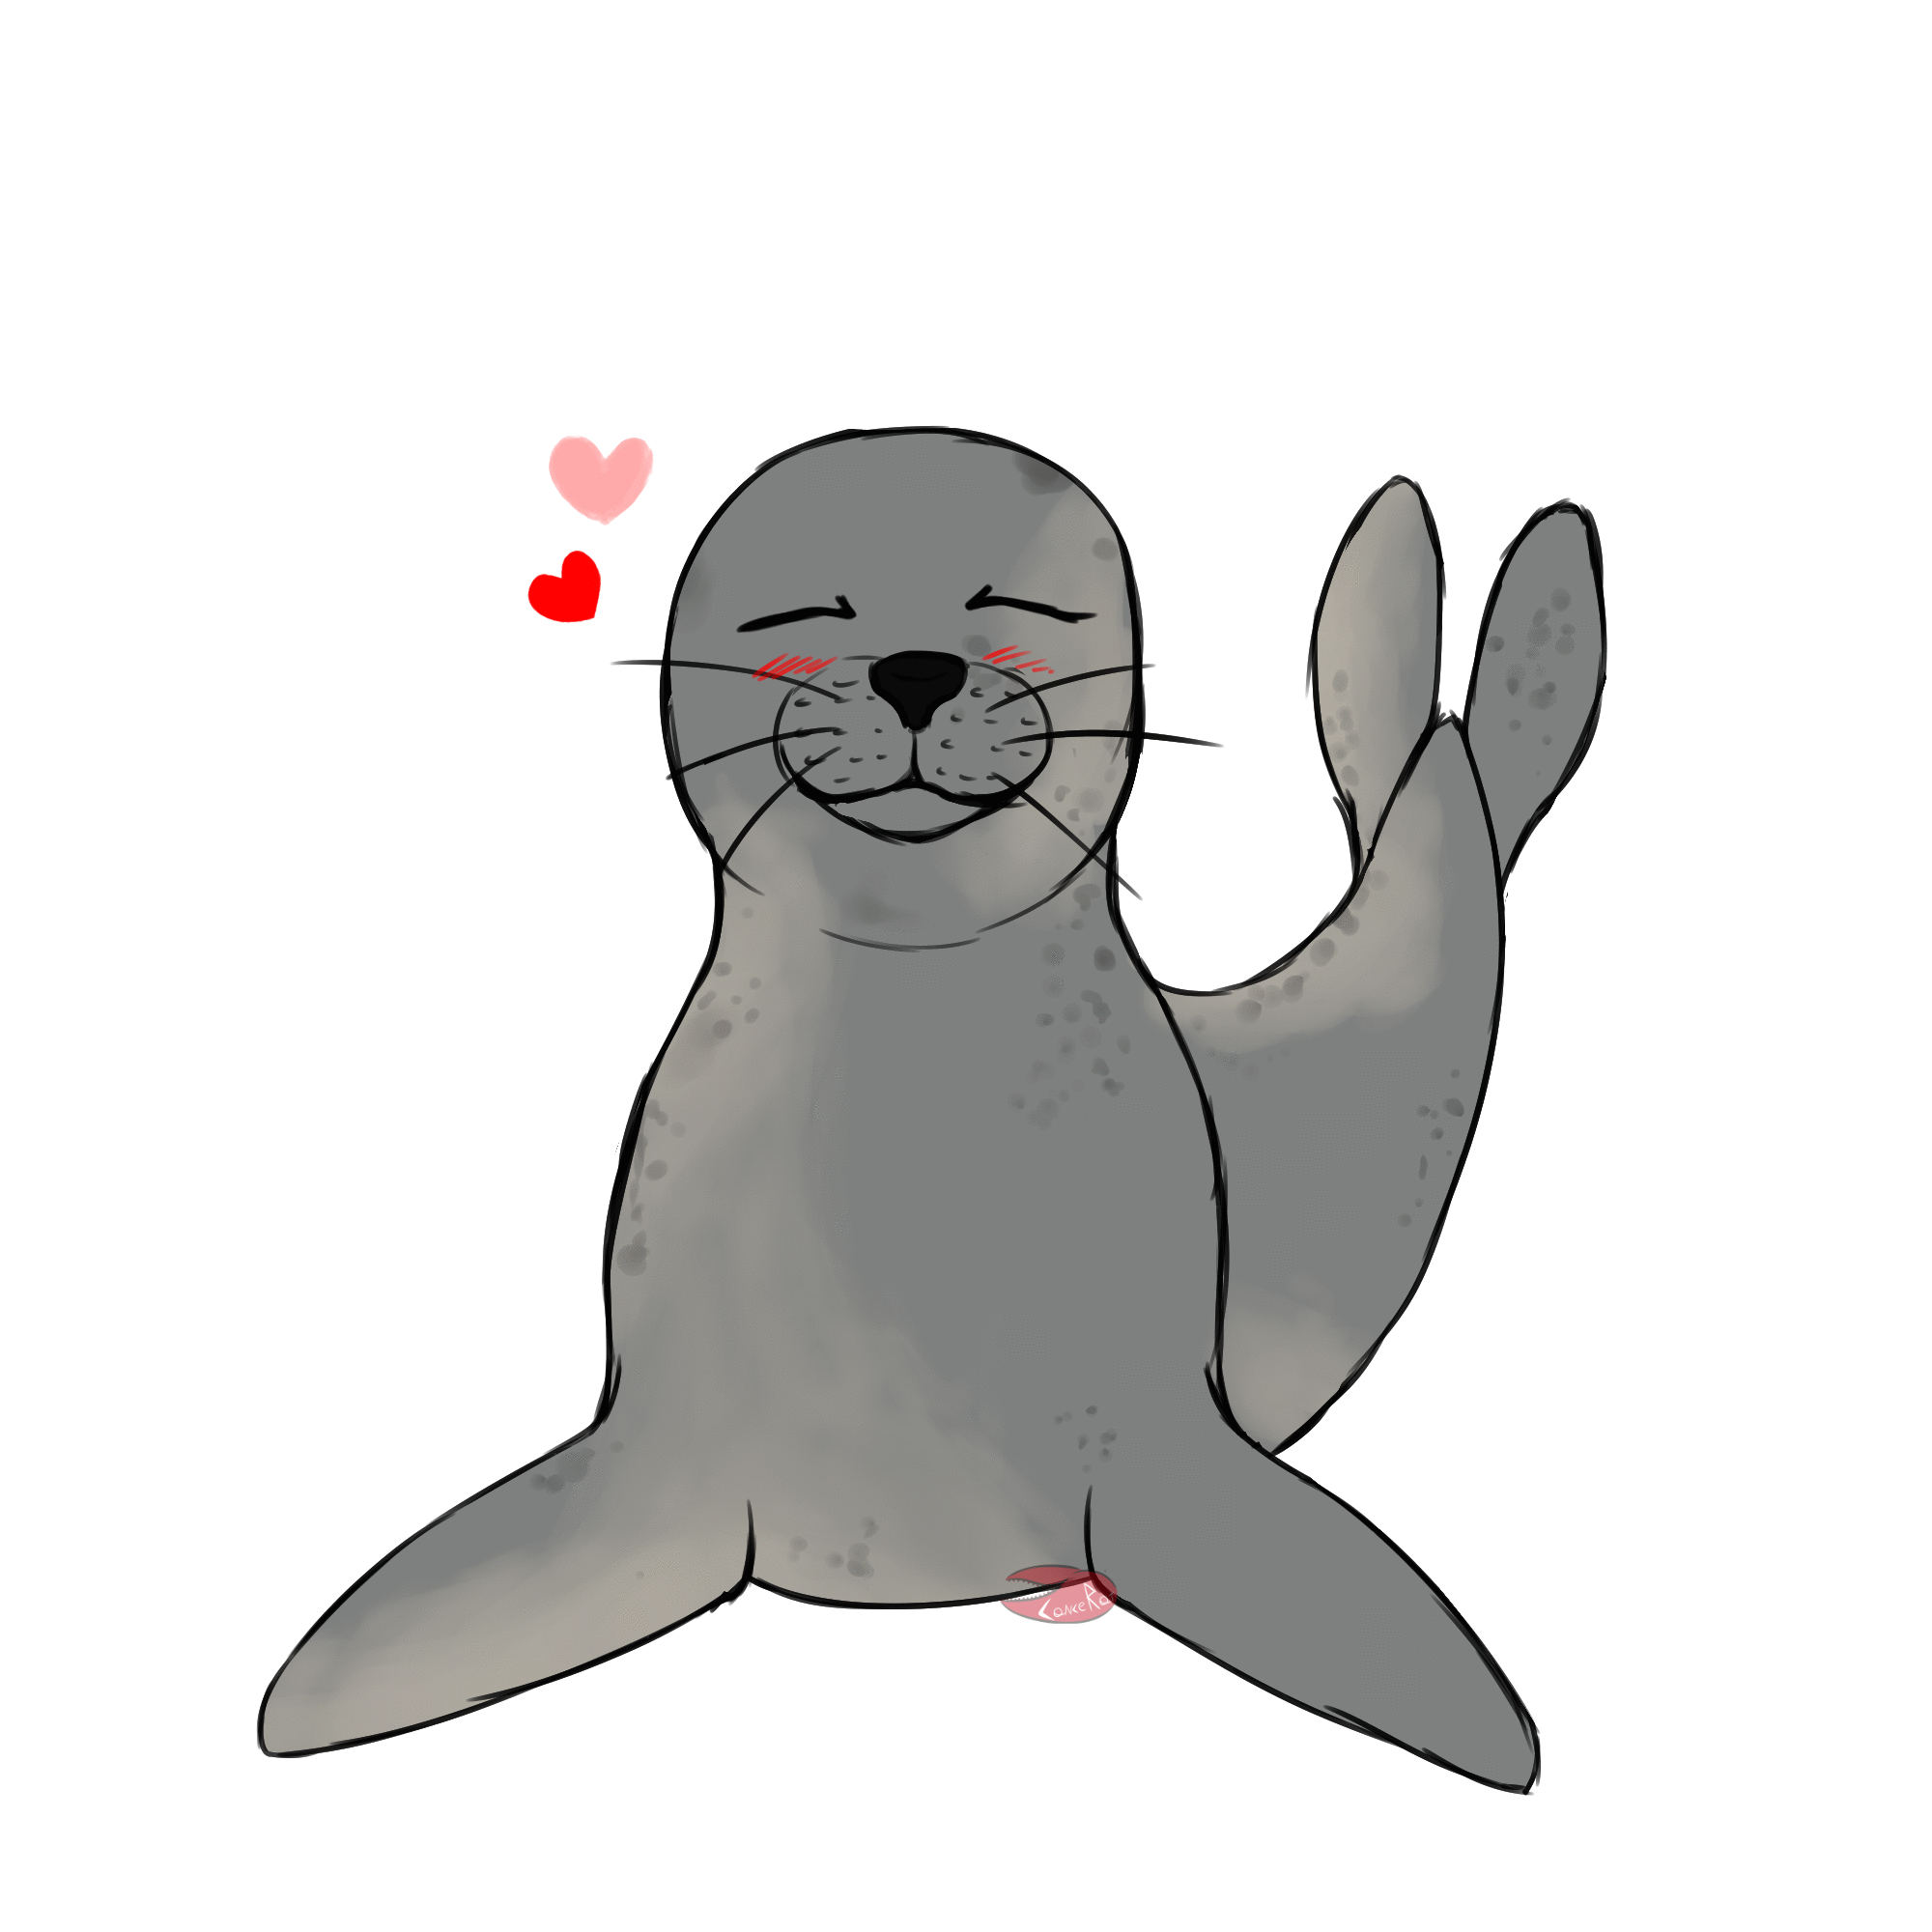 Cute seal [animated loop] by WujekHenryk on DeviantArt